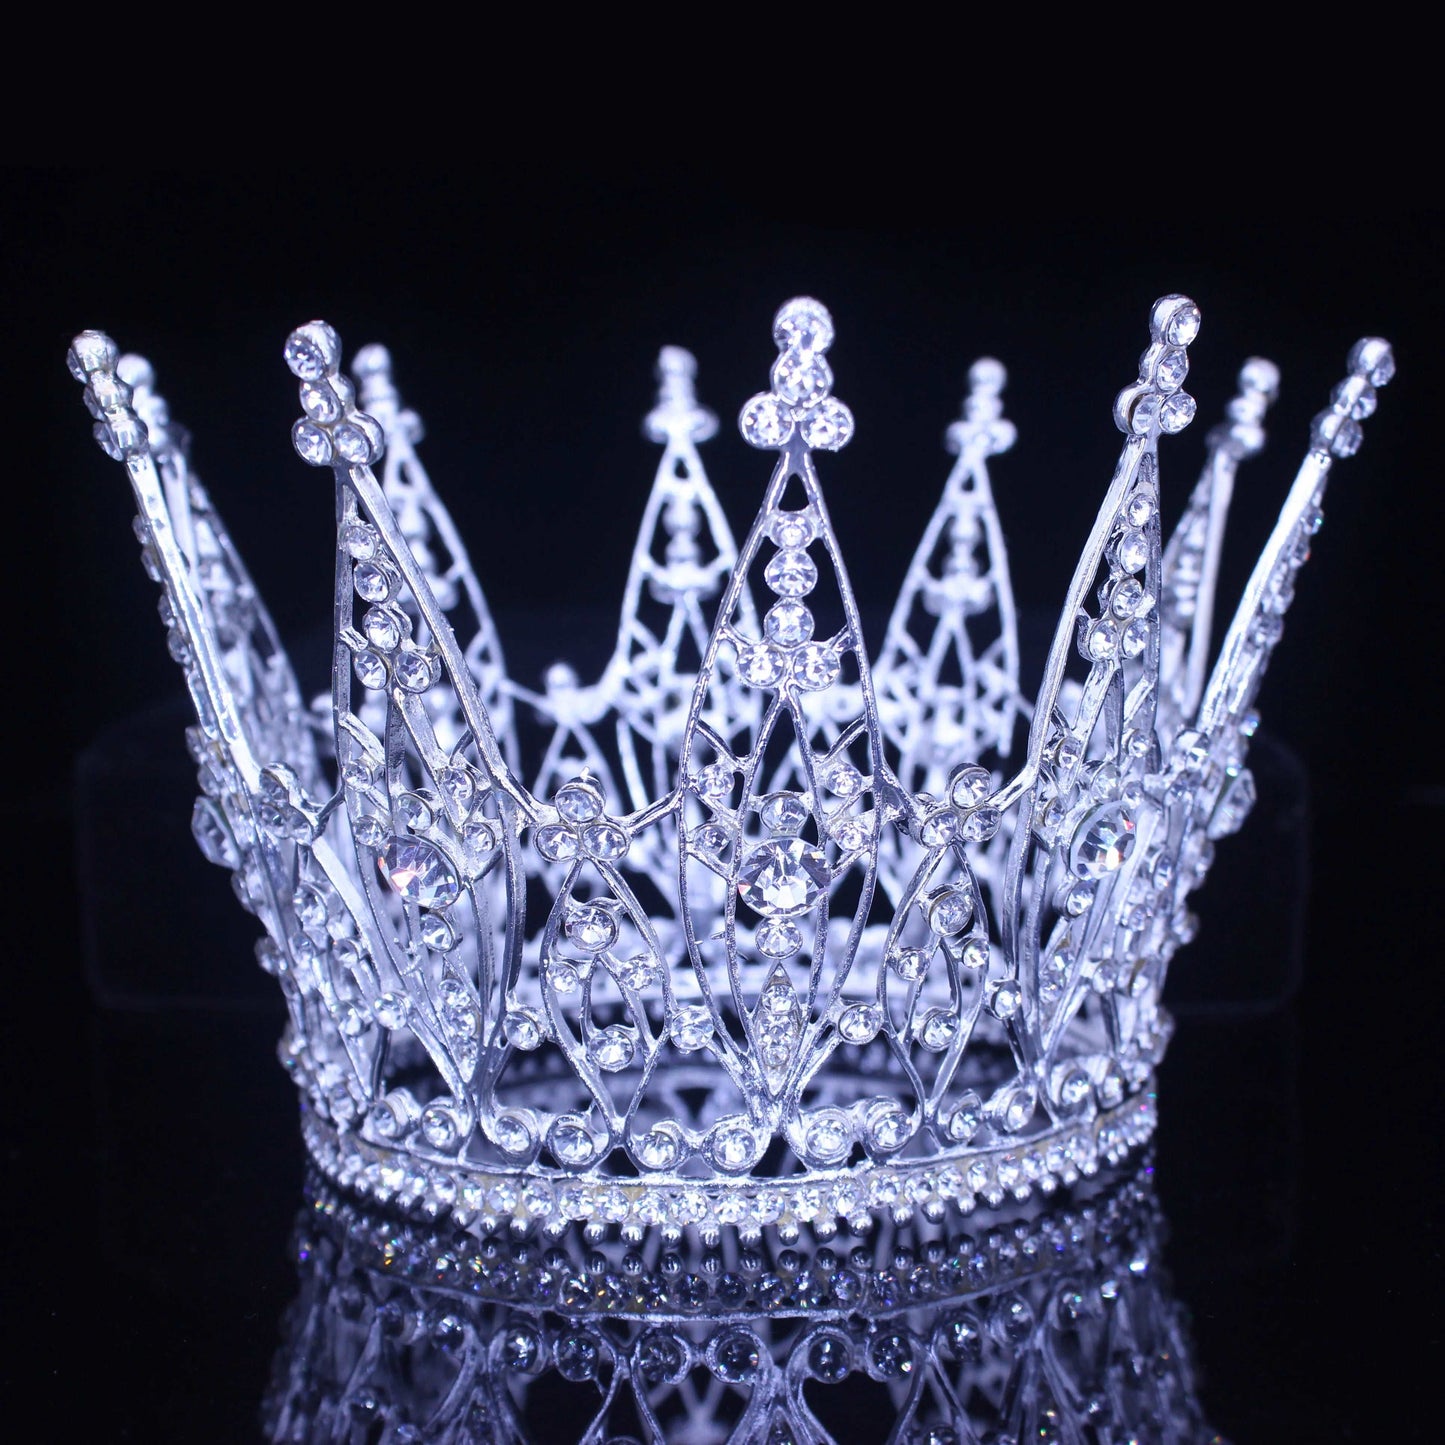 The Benedikte Crown